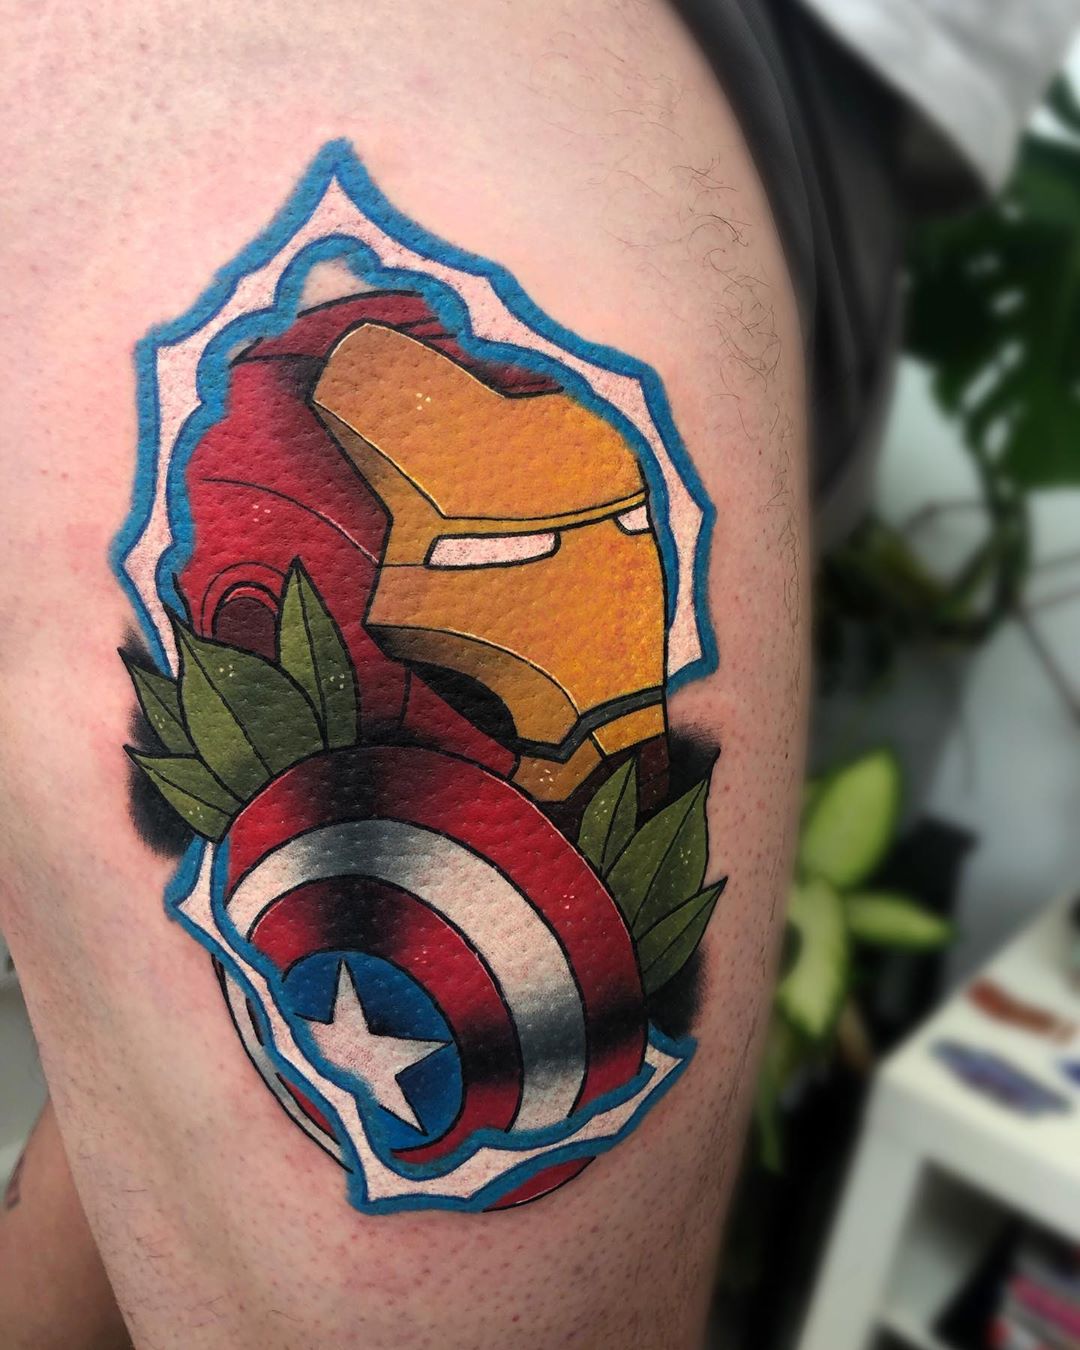 Iron Man holding Captain America's shield tattoo